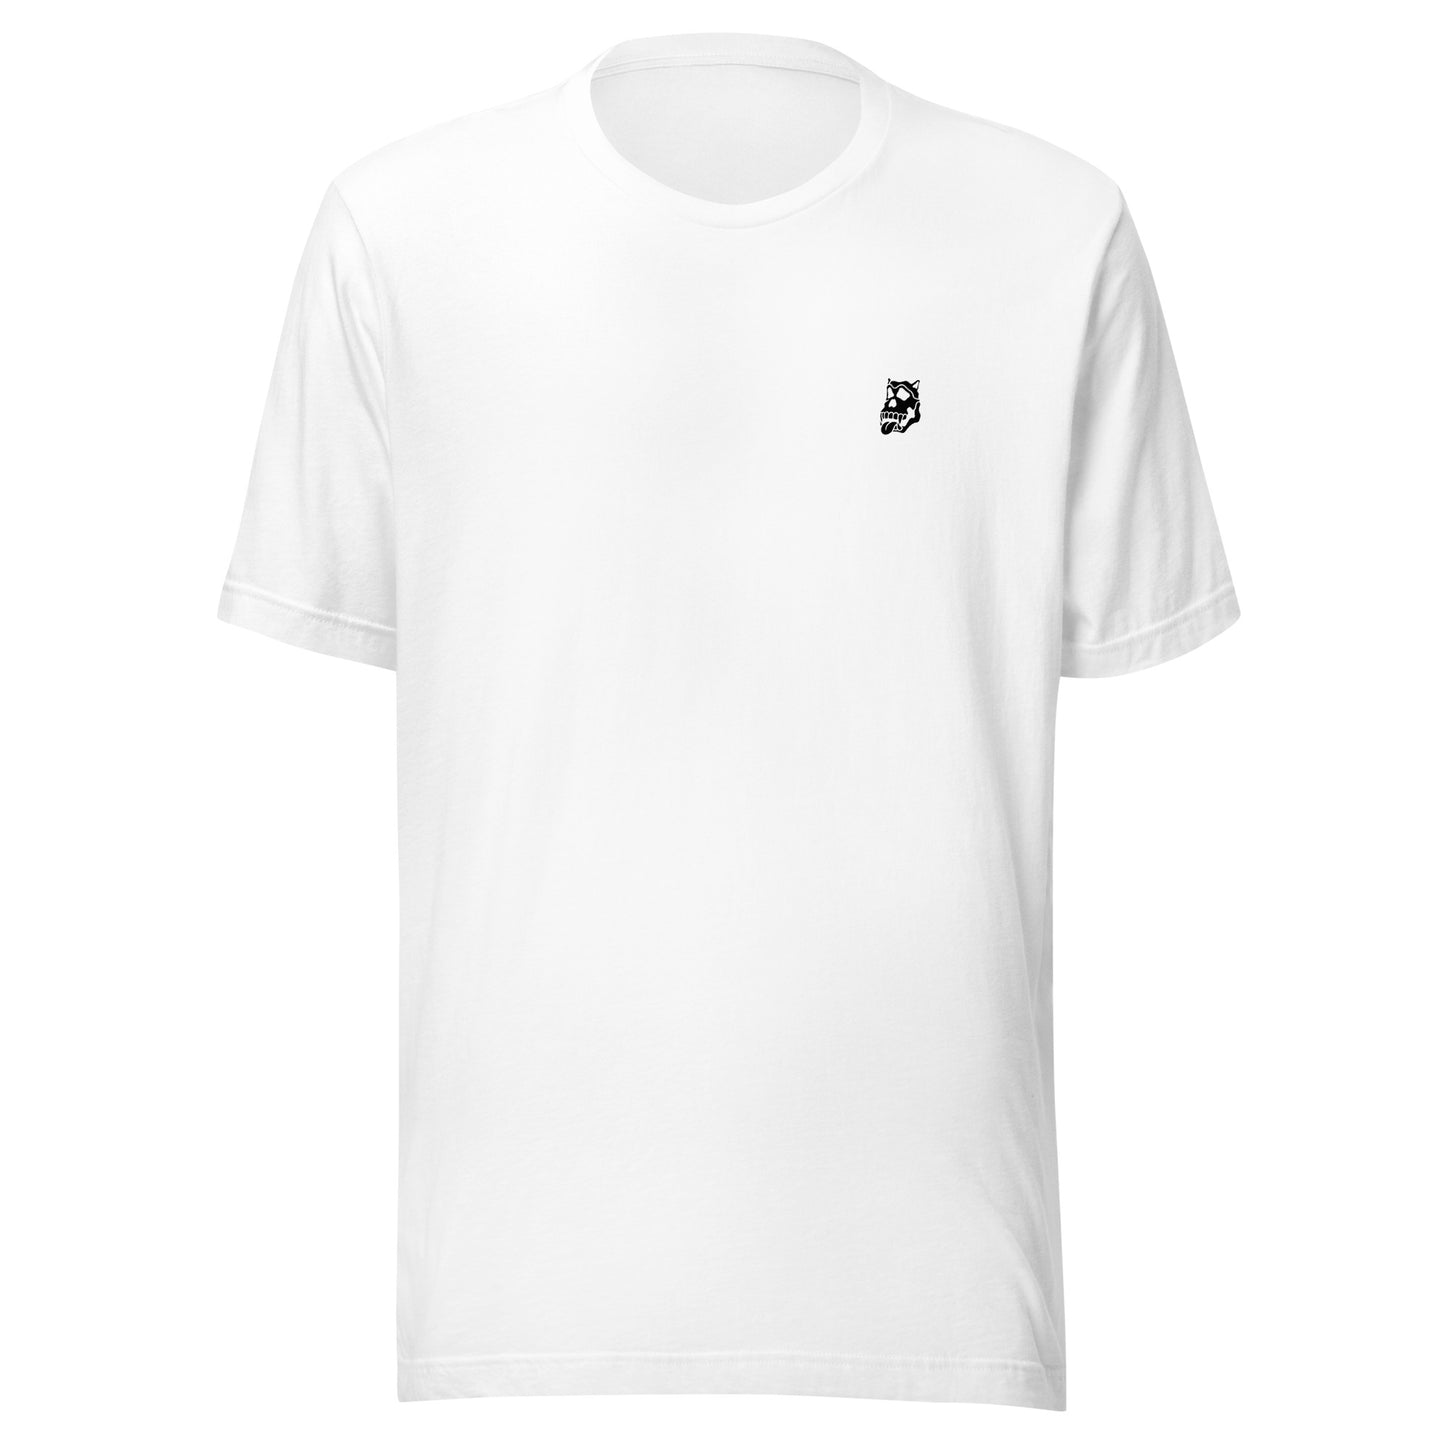 Bad Dogs Black & Blue Streetlogo T-shirt (White)